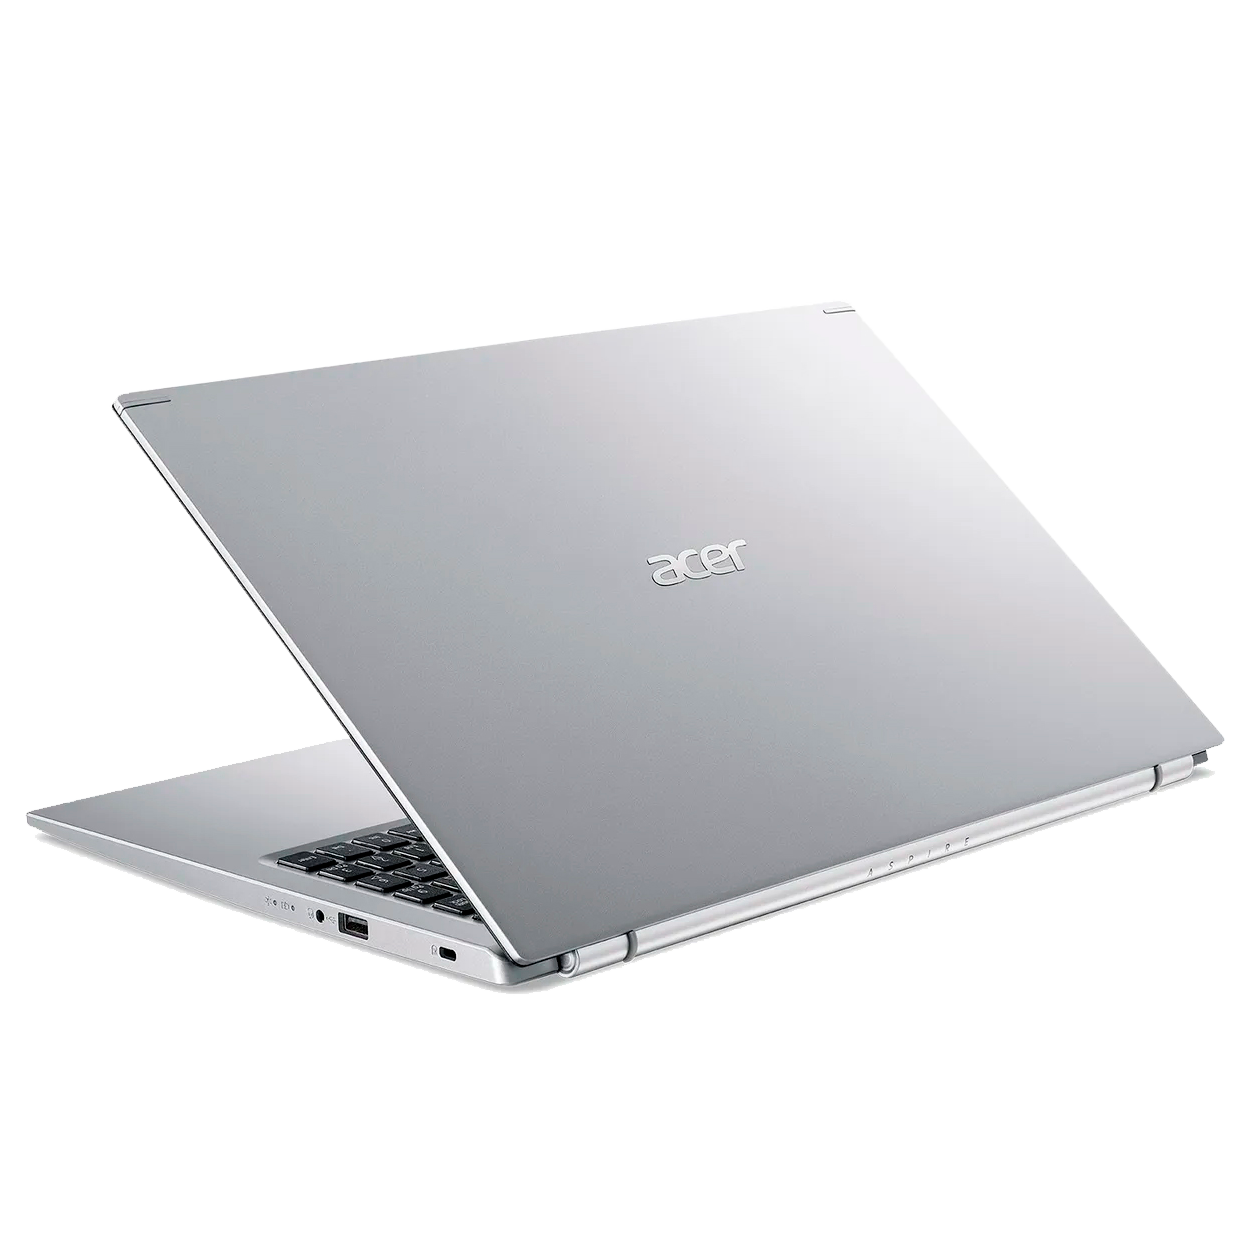 Acer Swift 1. Ноутбук Acer Swift 1 sf114-34-p1bn серебристый. Ультрабук Acer Swift 3. Ноутбук Acer Swift 1 sf114-34-p22p NX.a75er.006.